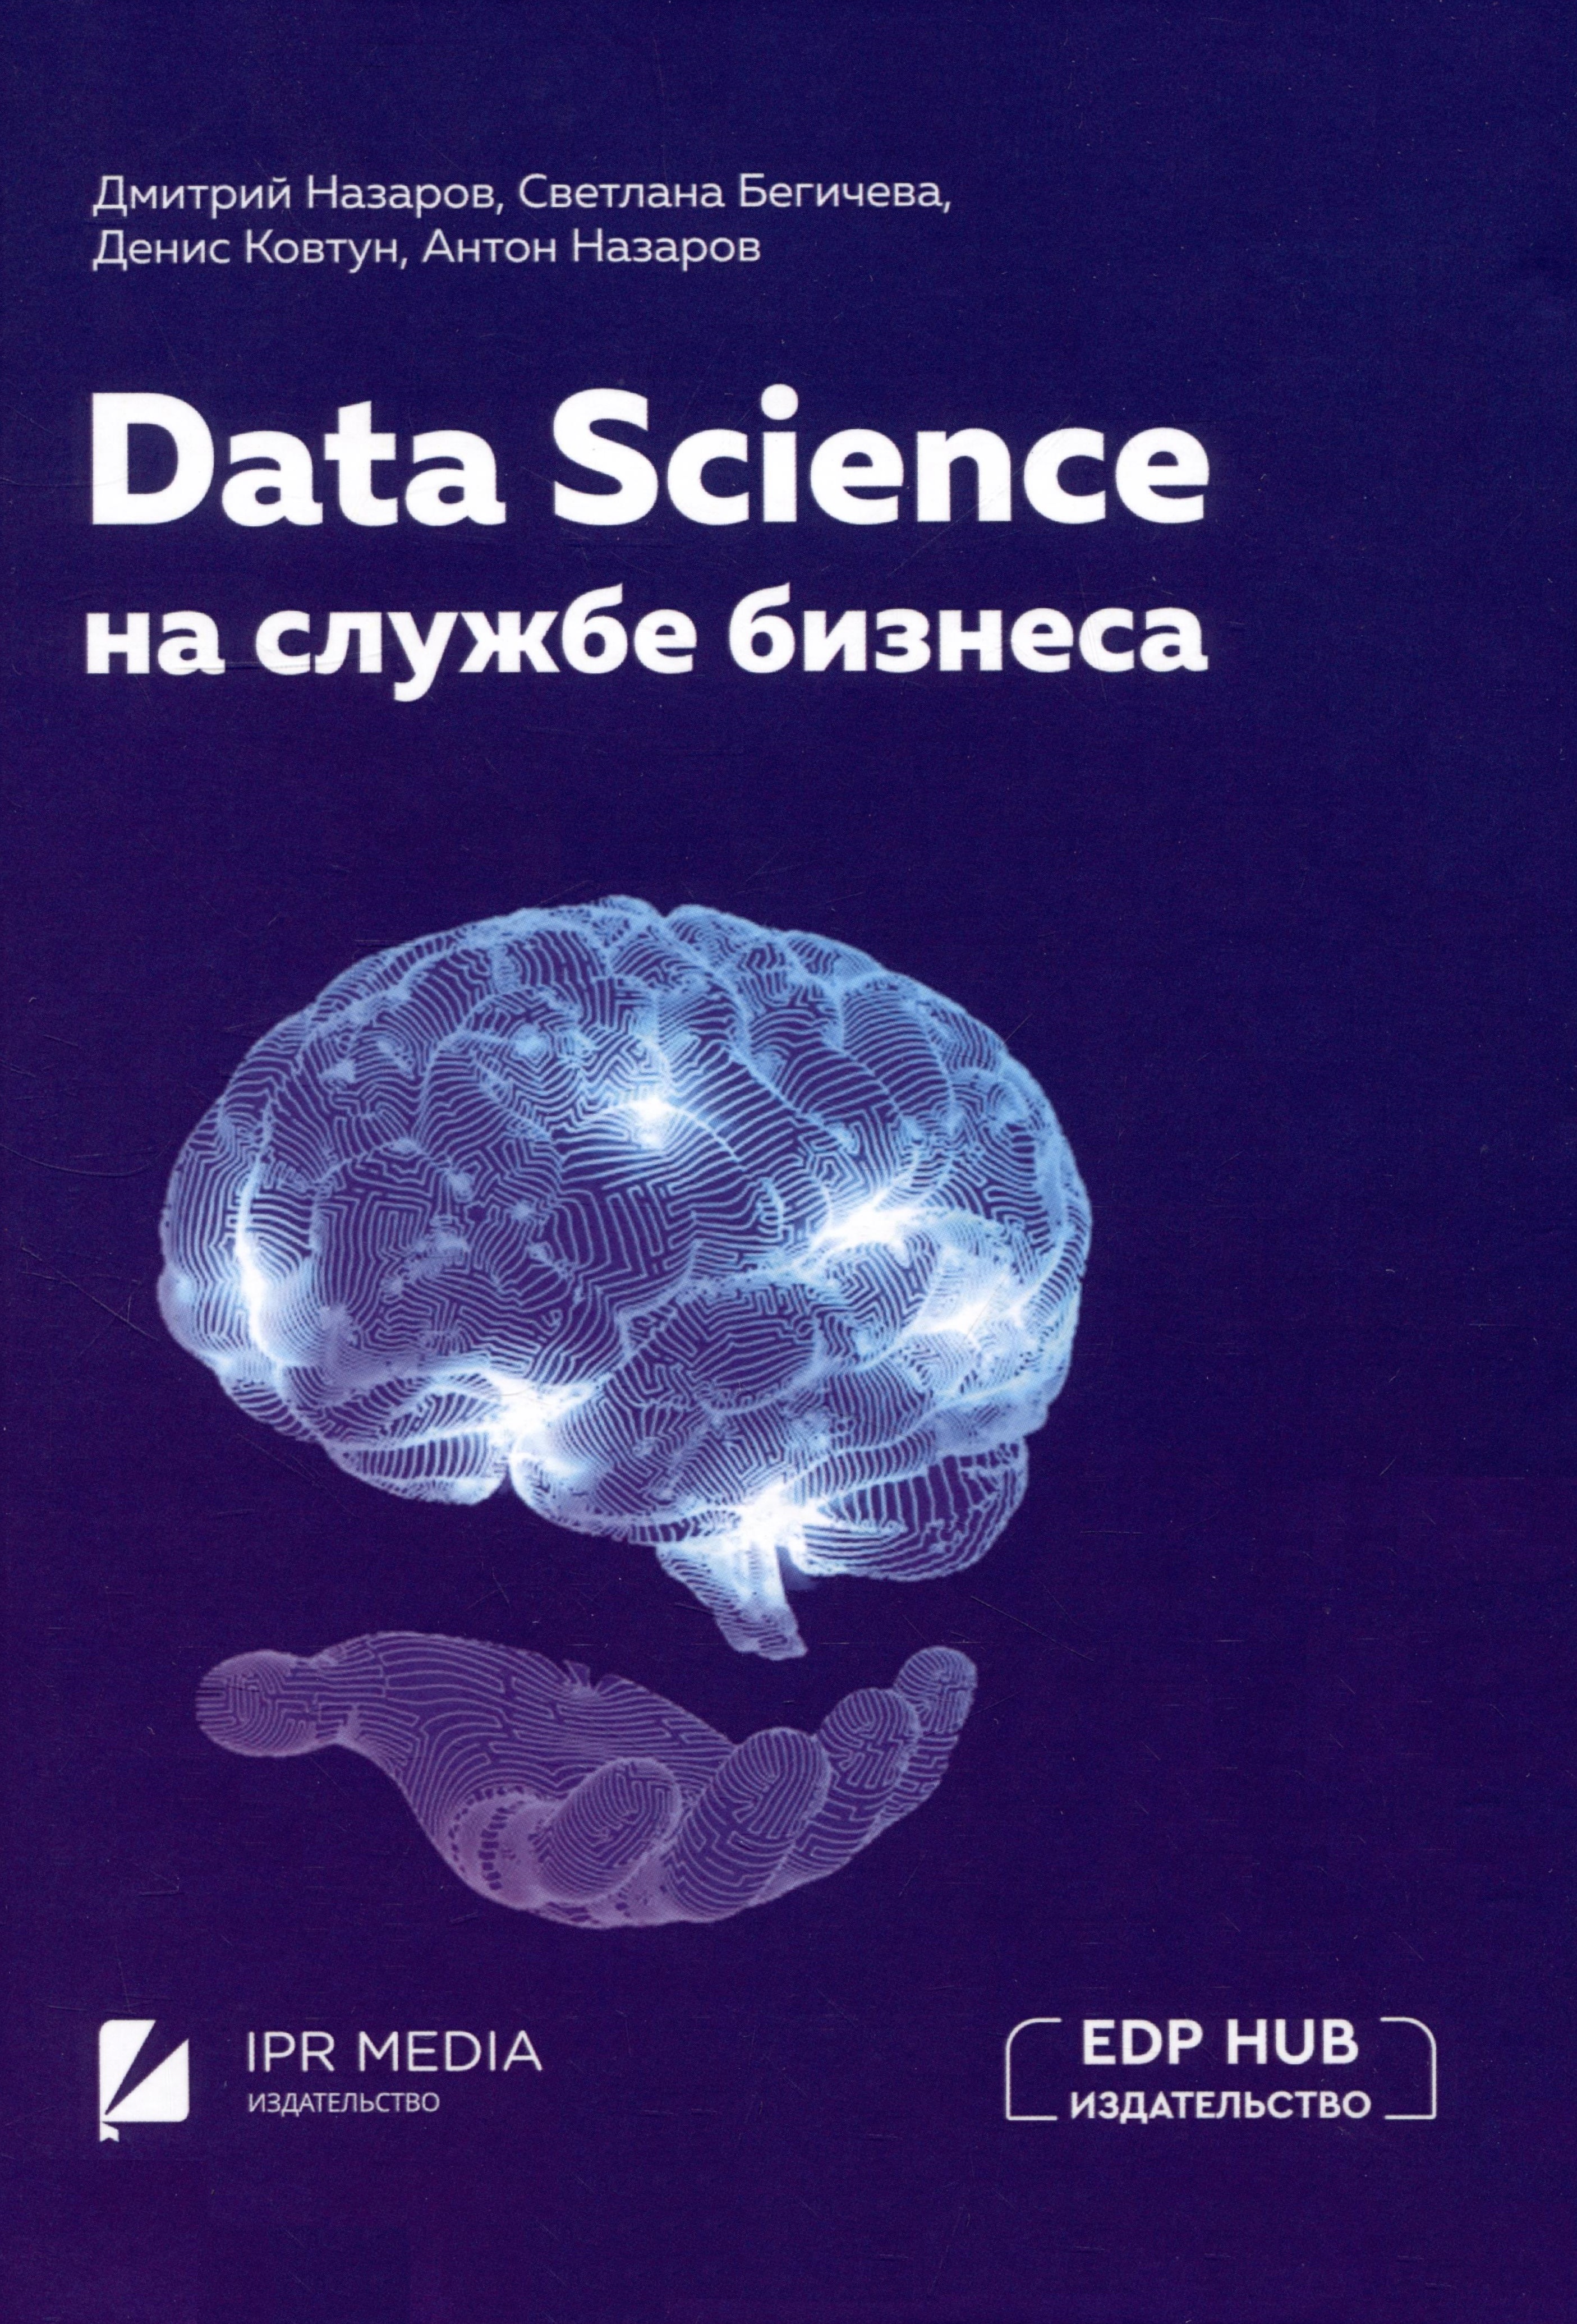 data scientist с нуля до middle Data Science на службе бизнеса. Книга об интеллектуальном анализе данных